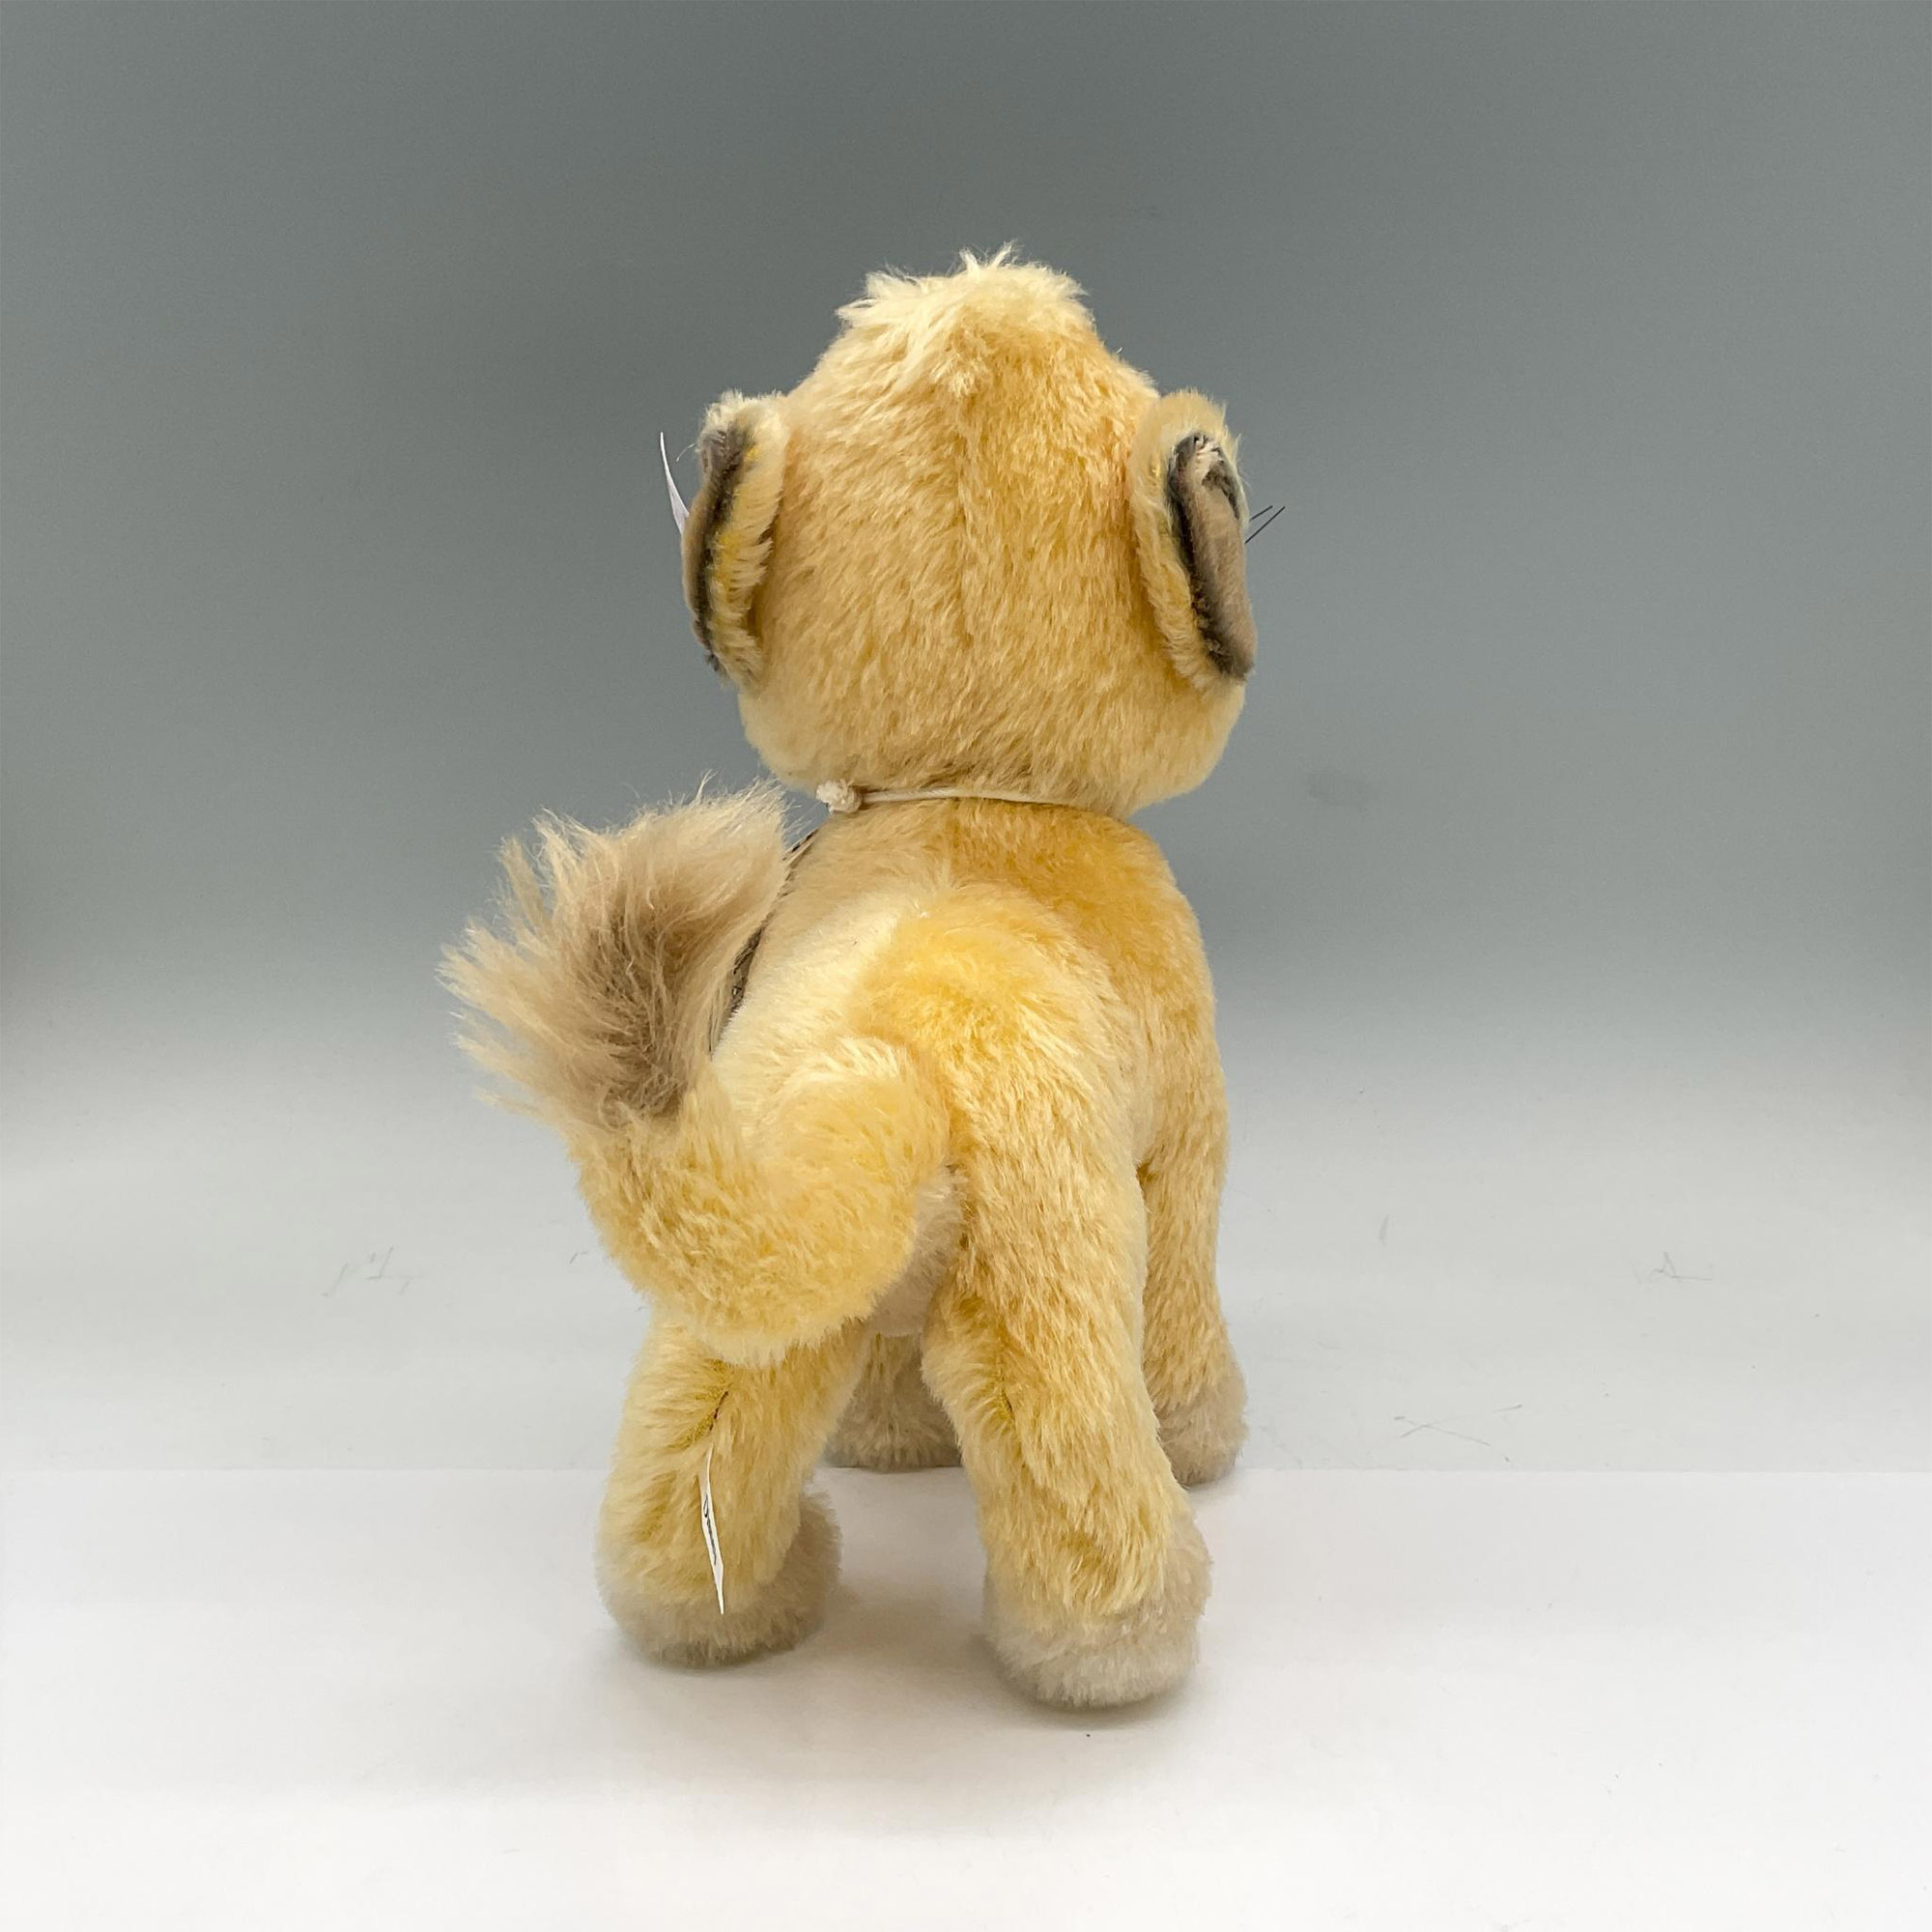 Steiff Mohair Stuffed Figure, Simba of Lion King - Image 3 of 4